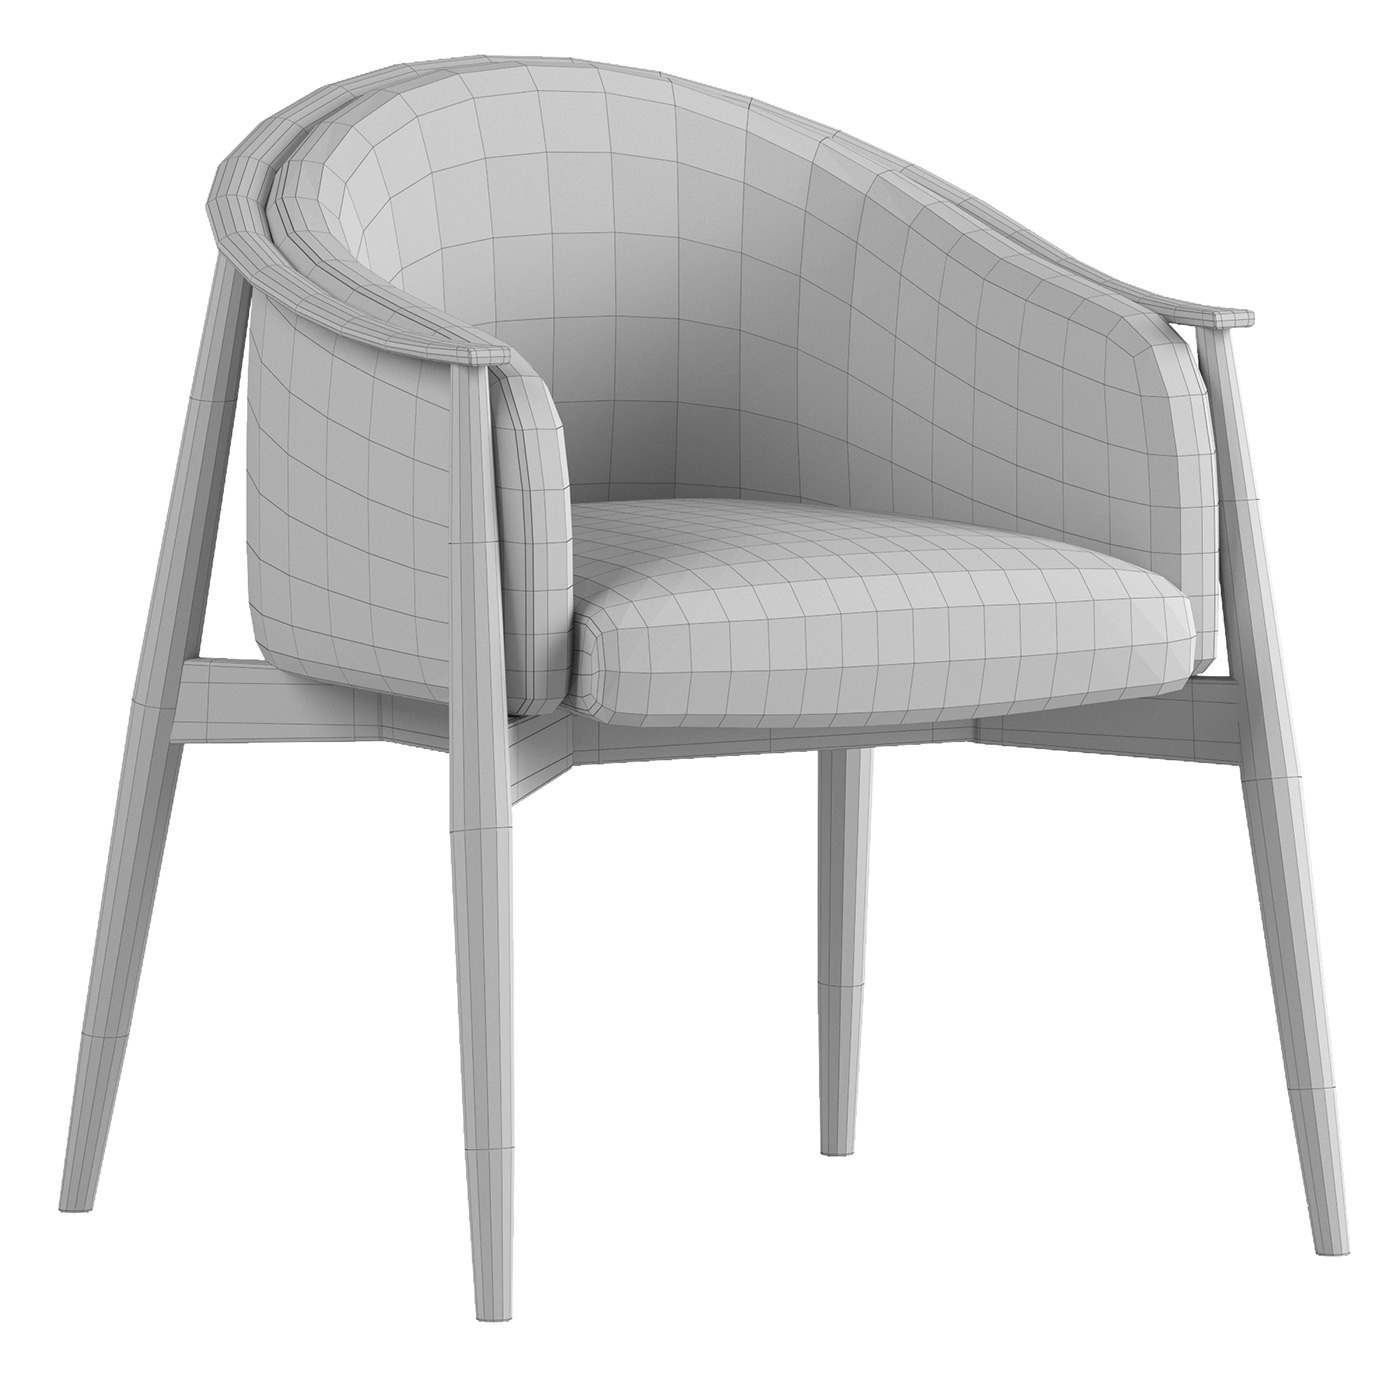 furniture Interior Render visualization 3ds max corona exterior archviz chair